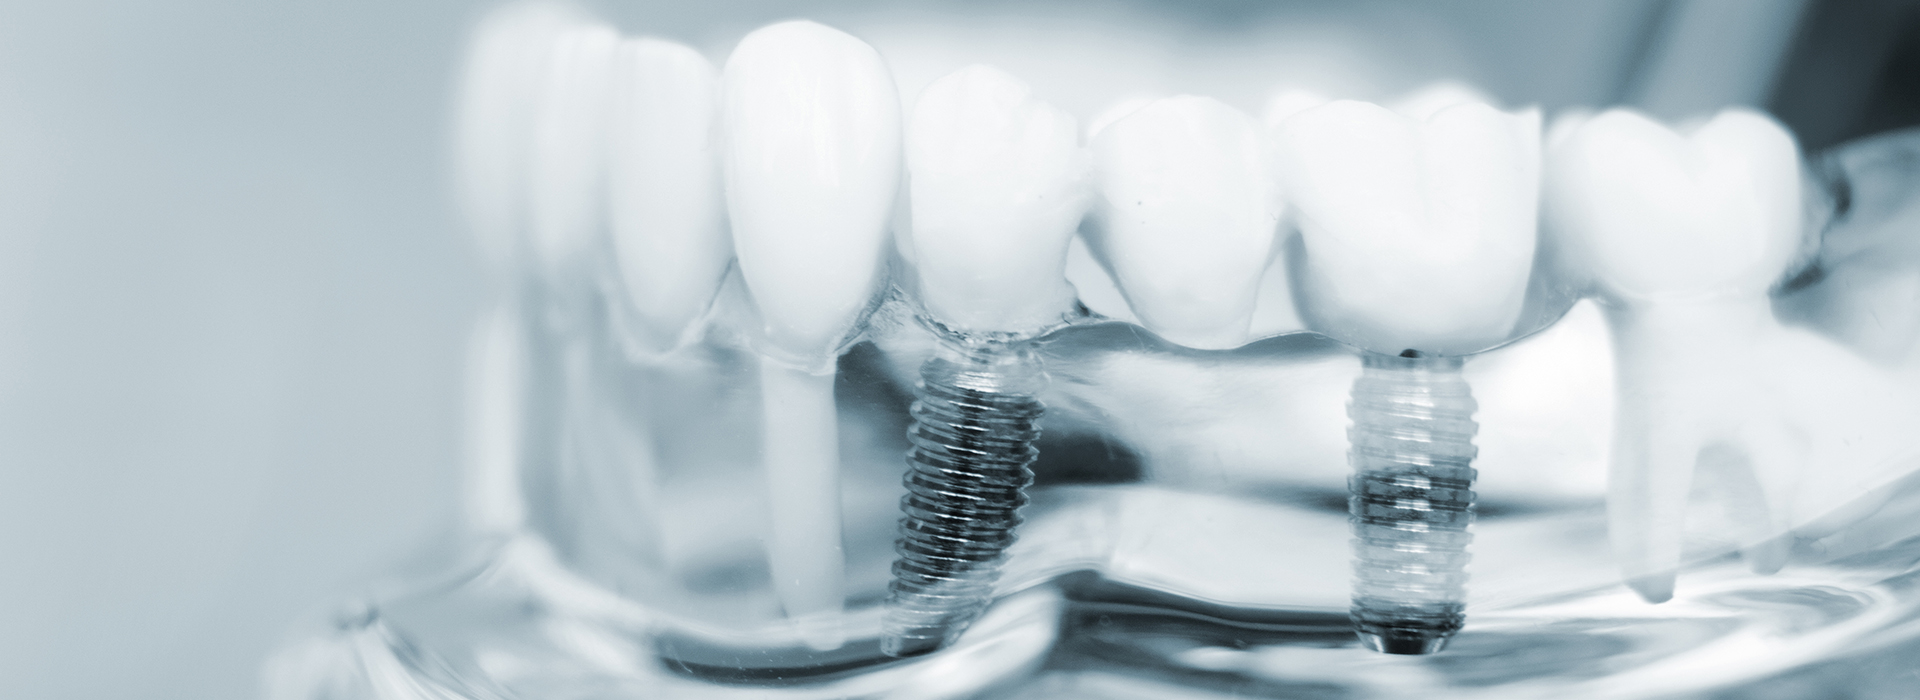 Great Neck Dental Arts | Implant Dentistry, Pediatric Dentistry and iTero Element reg  5D scanner